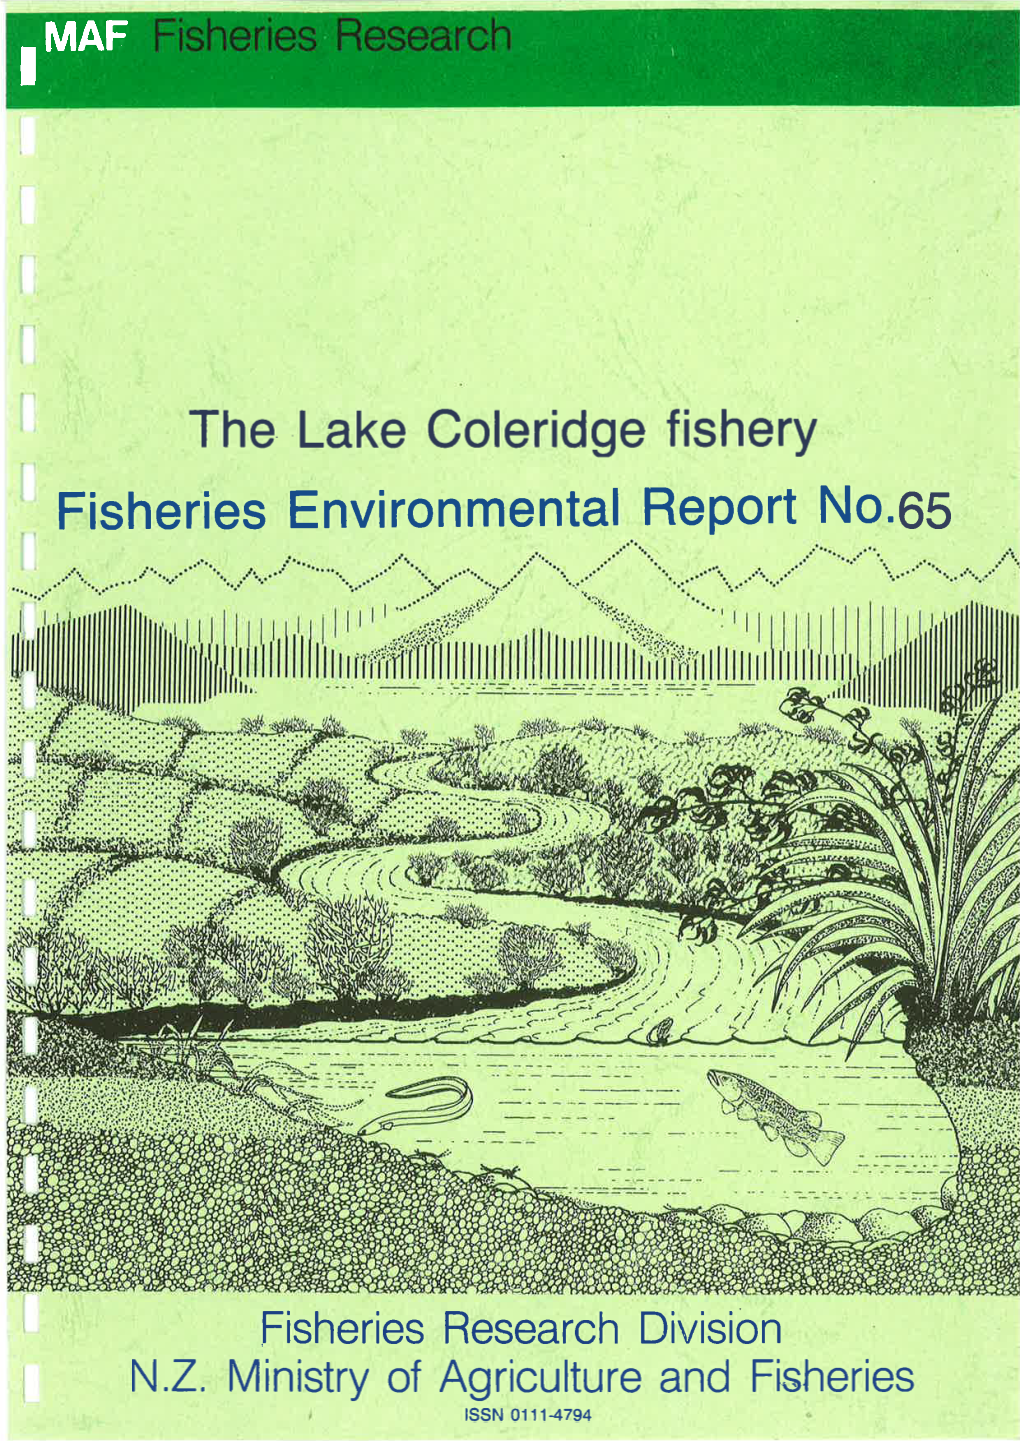 The Lake Coleridge Fishery Fisheries Environmental Report No.65